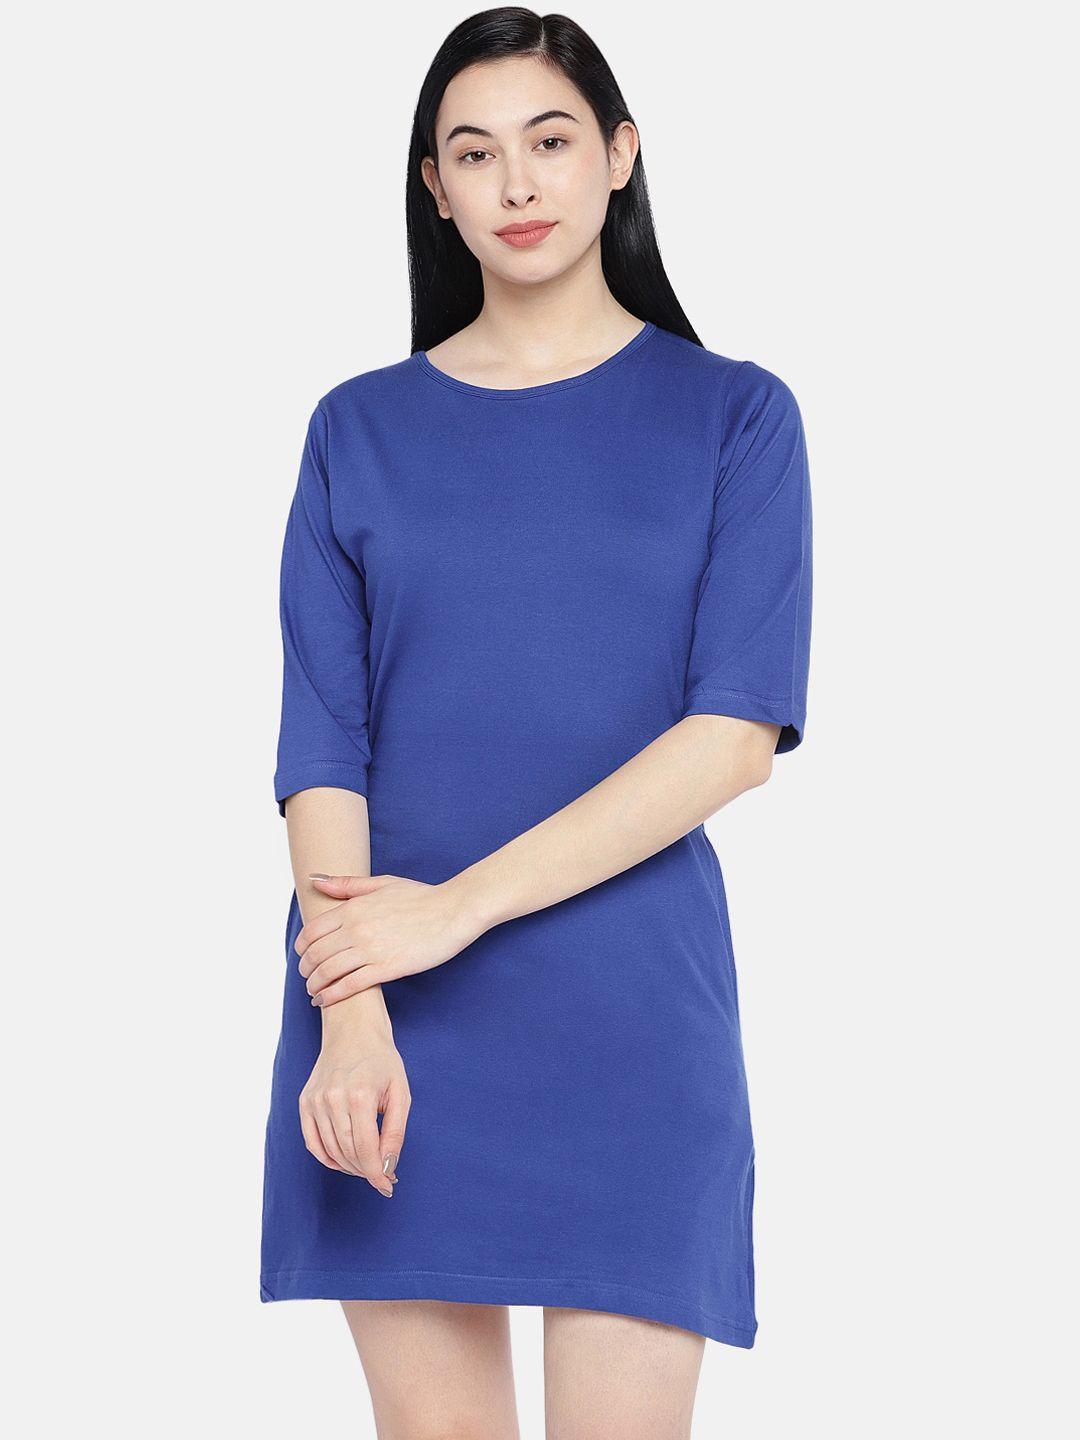 status mantra blue t-shirt dress